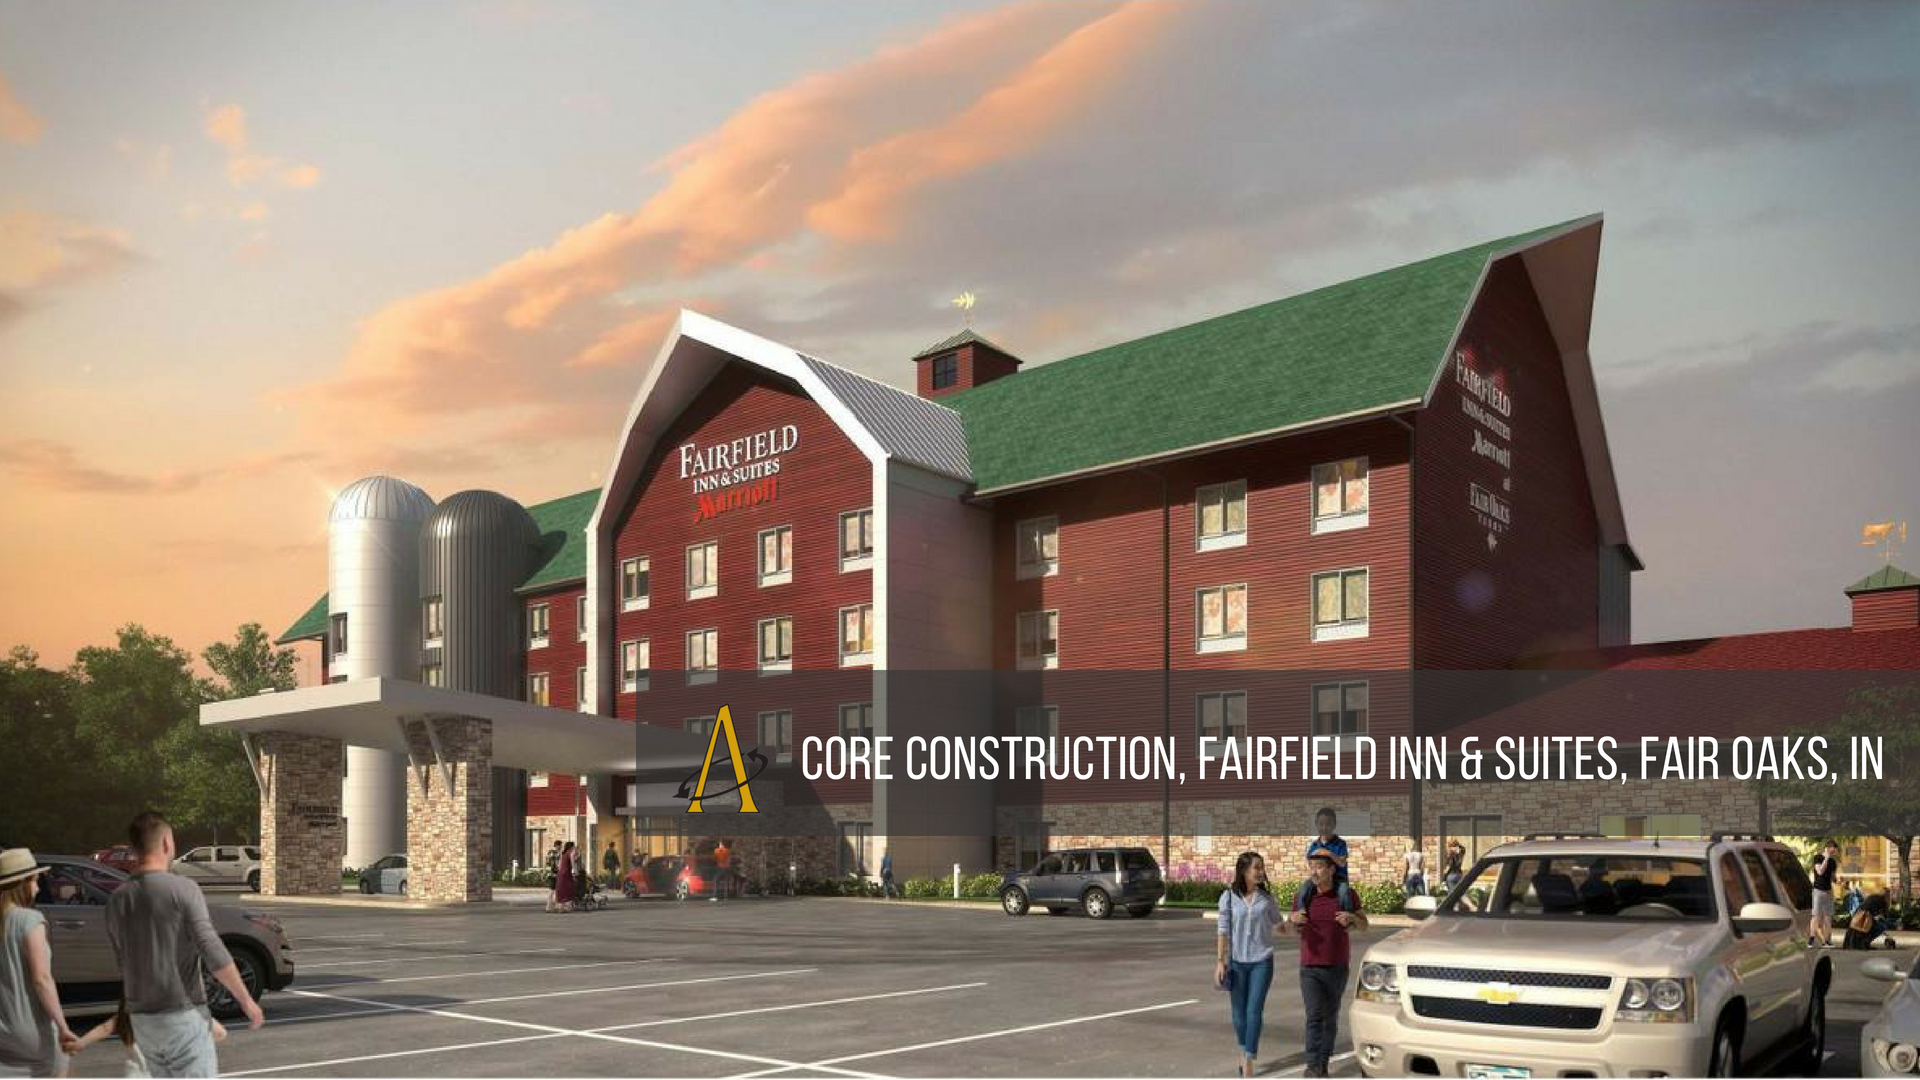 Core Construction, Fairfield Inn & Suites, Fair Oaks, IN